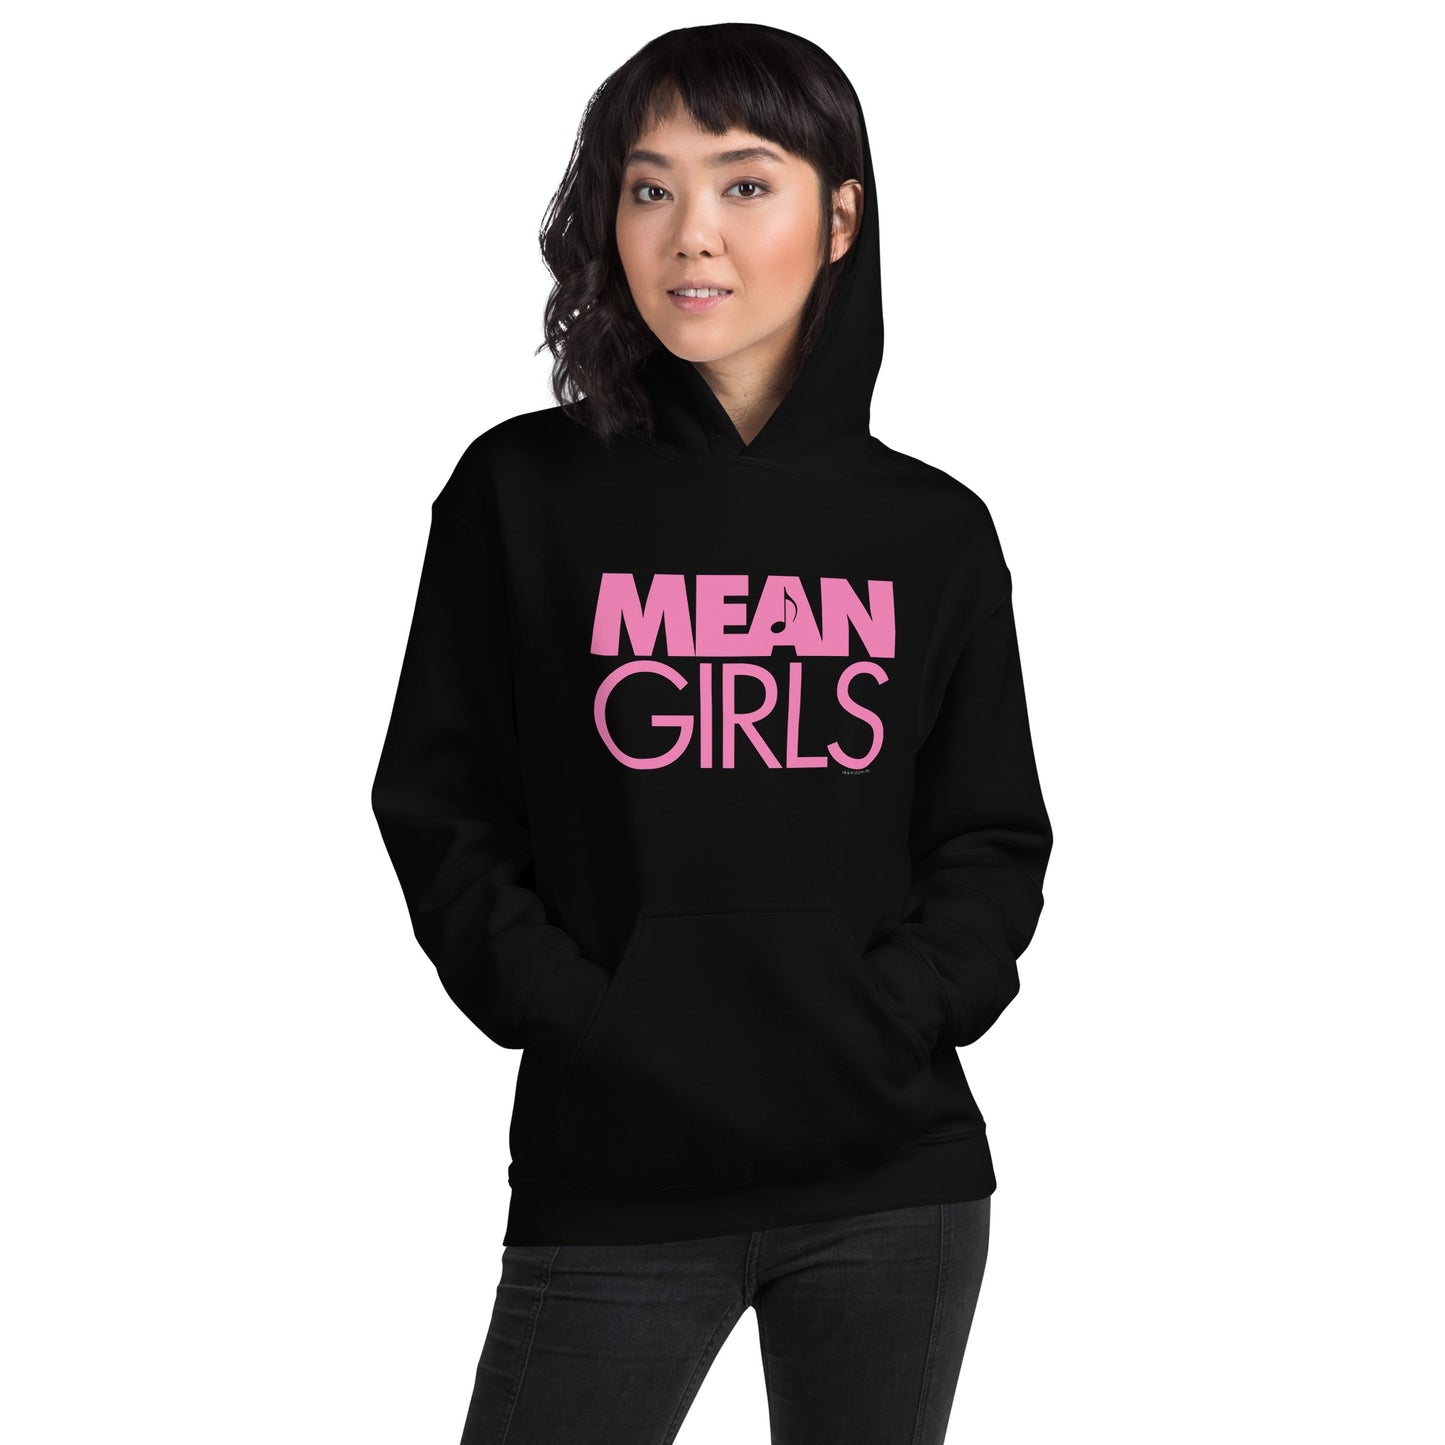 Mean Girls Broadway Musical Size S Sweatshirt Movie Blue Size S